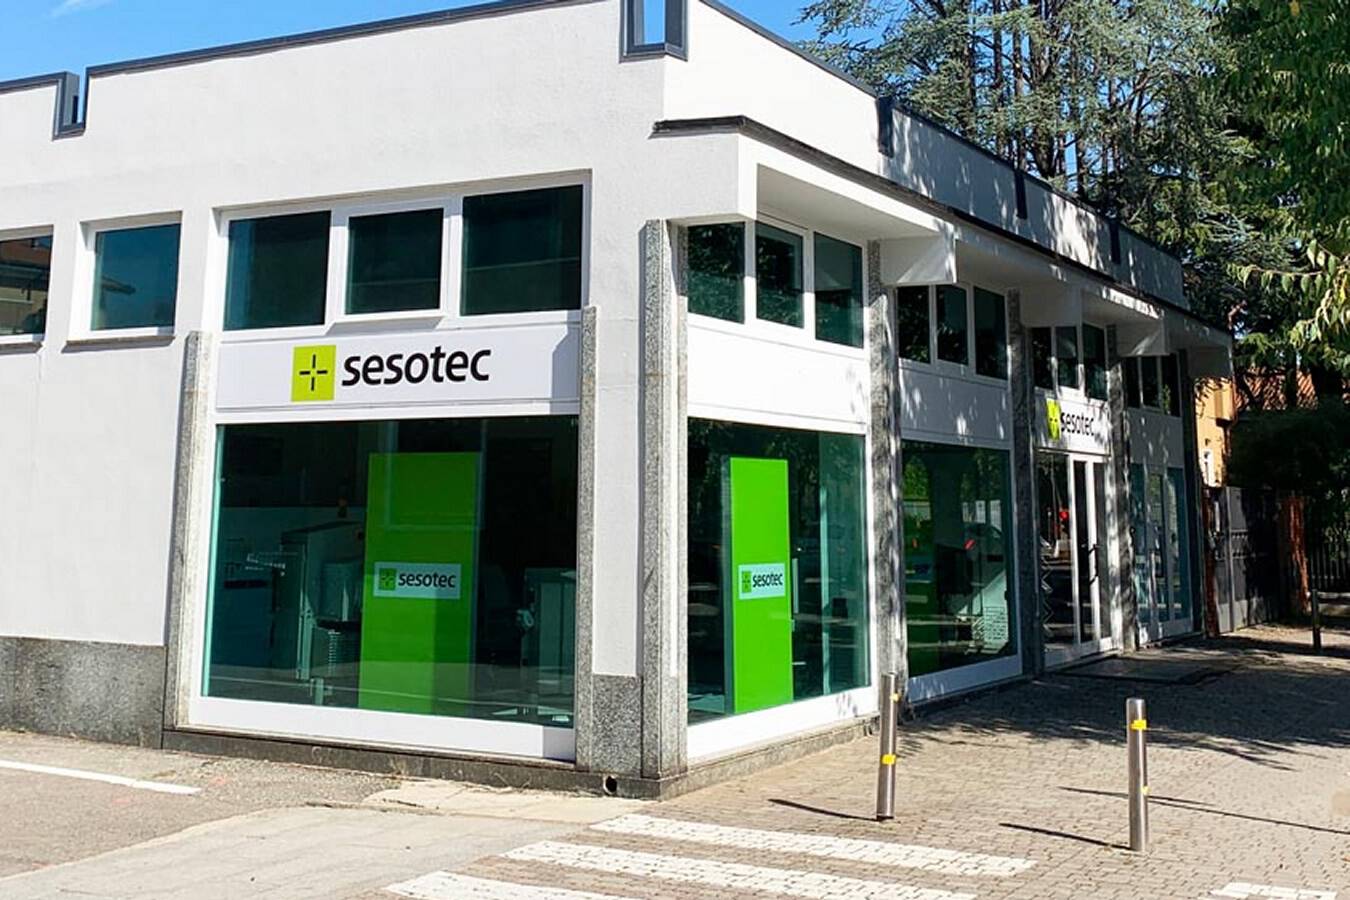 Sesotec’s showroom in Italy